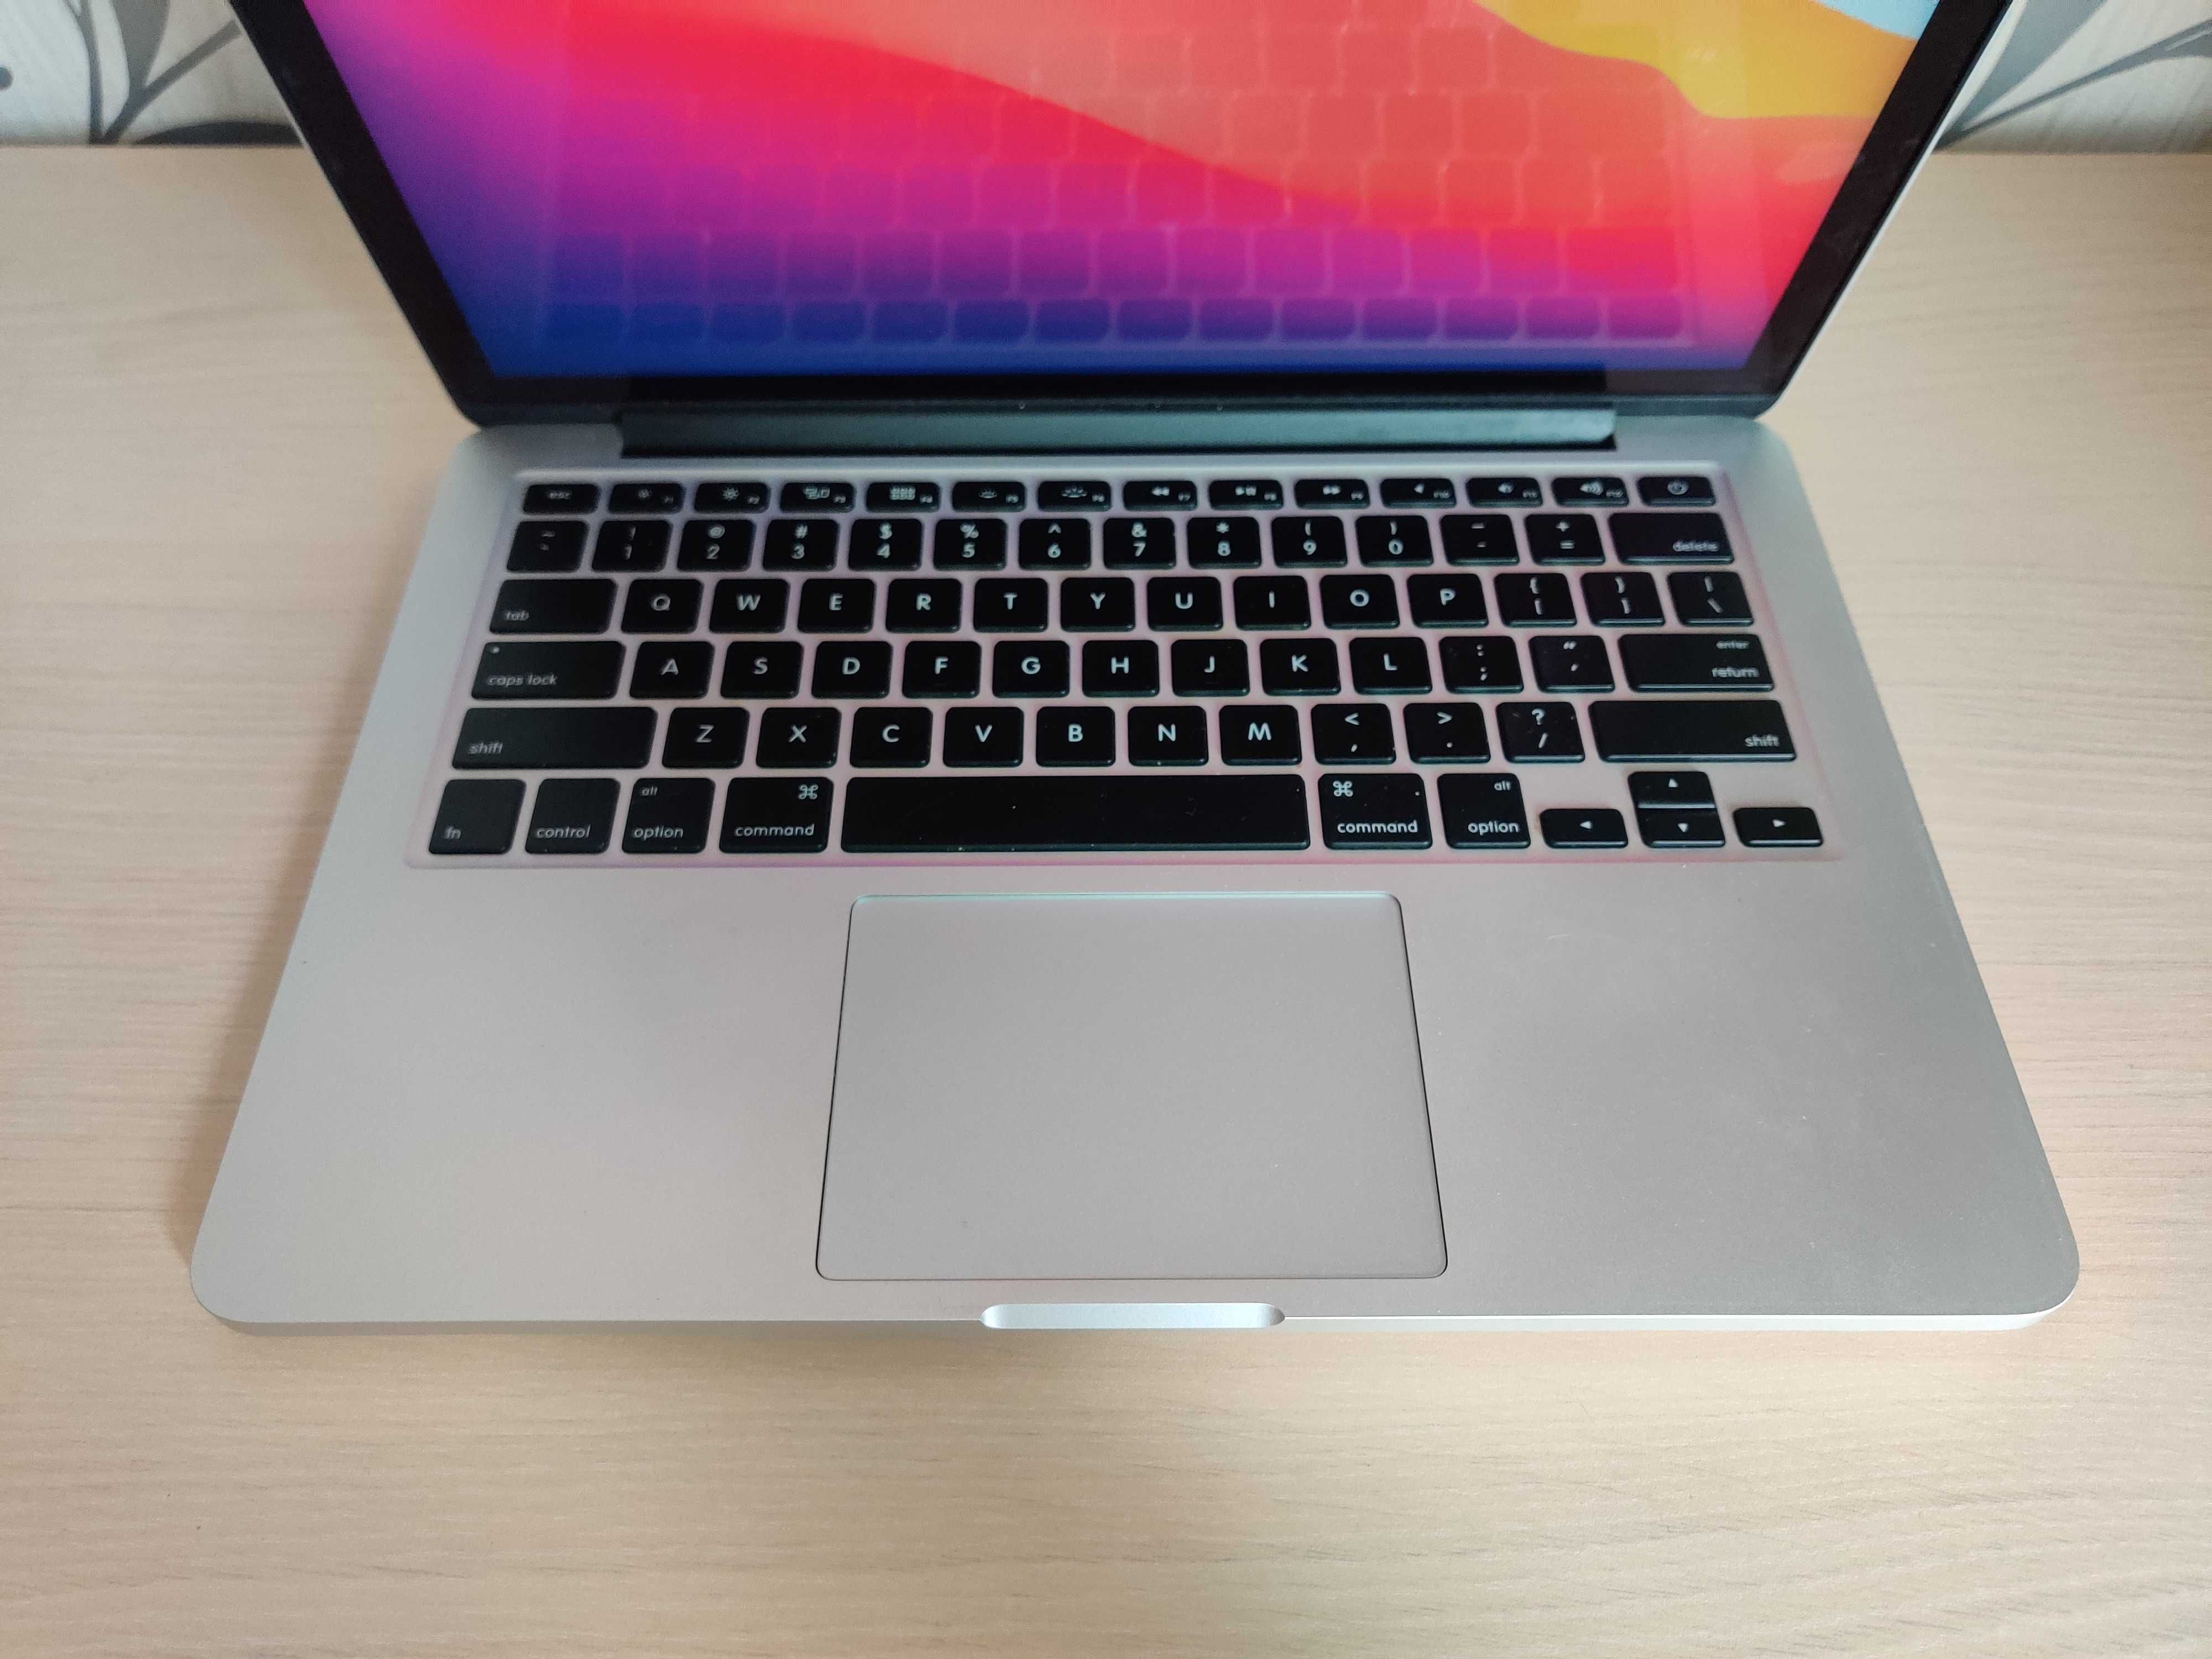 MacBook Pro (Retina, 13-inch)

- Early 2015 -